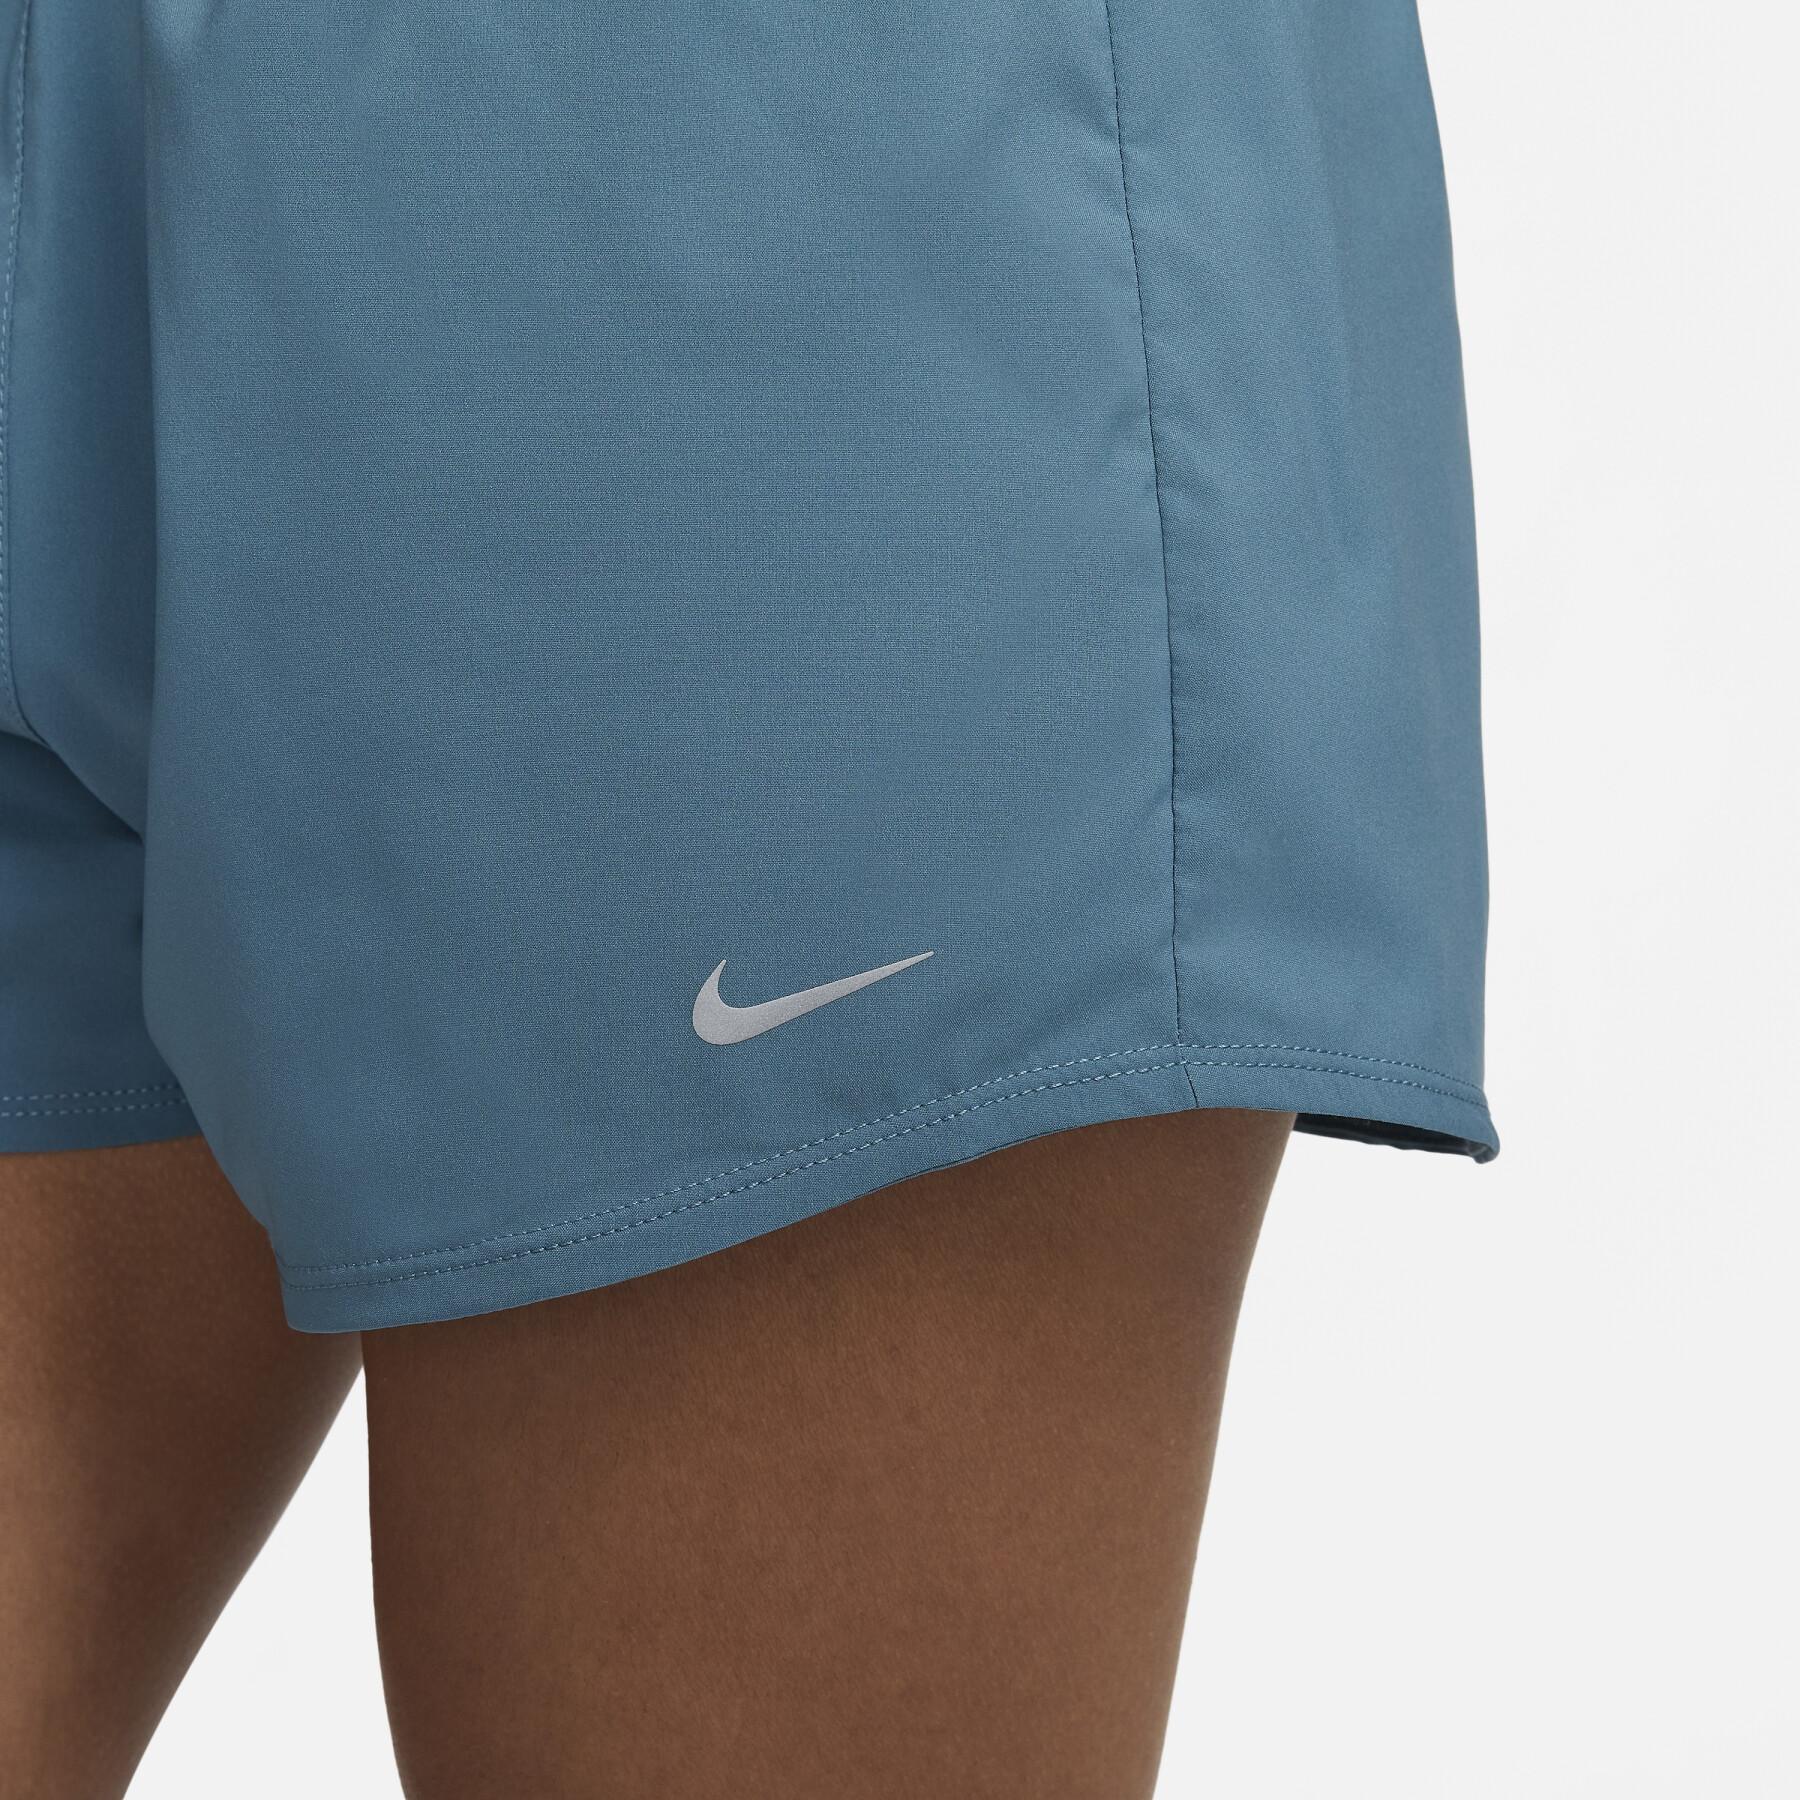 Shorts für Frauen Nike One Dri-Fit HR 3 " BR